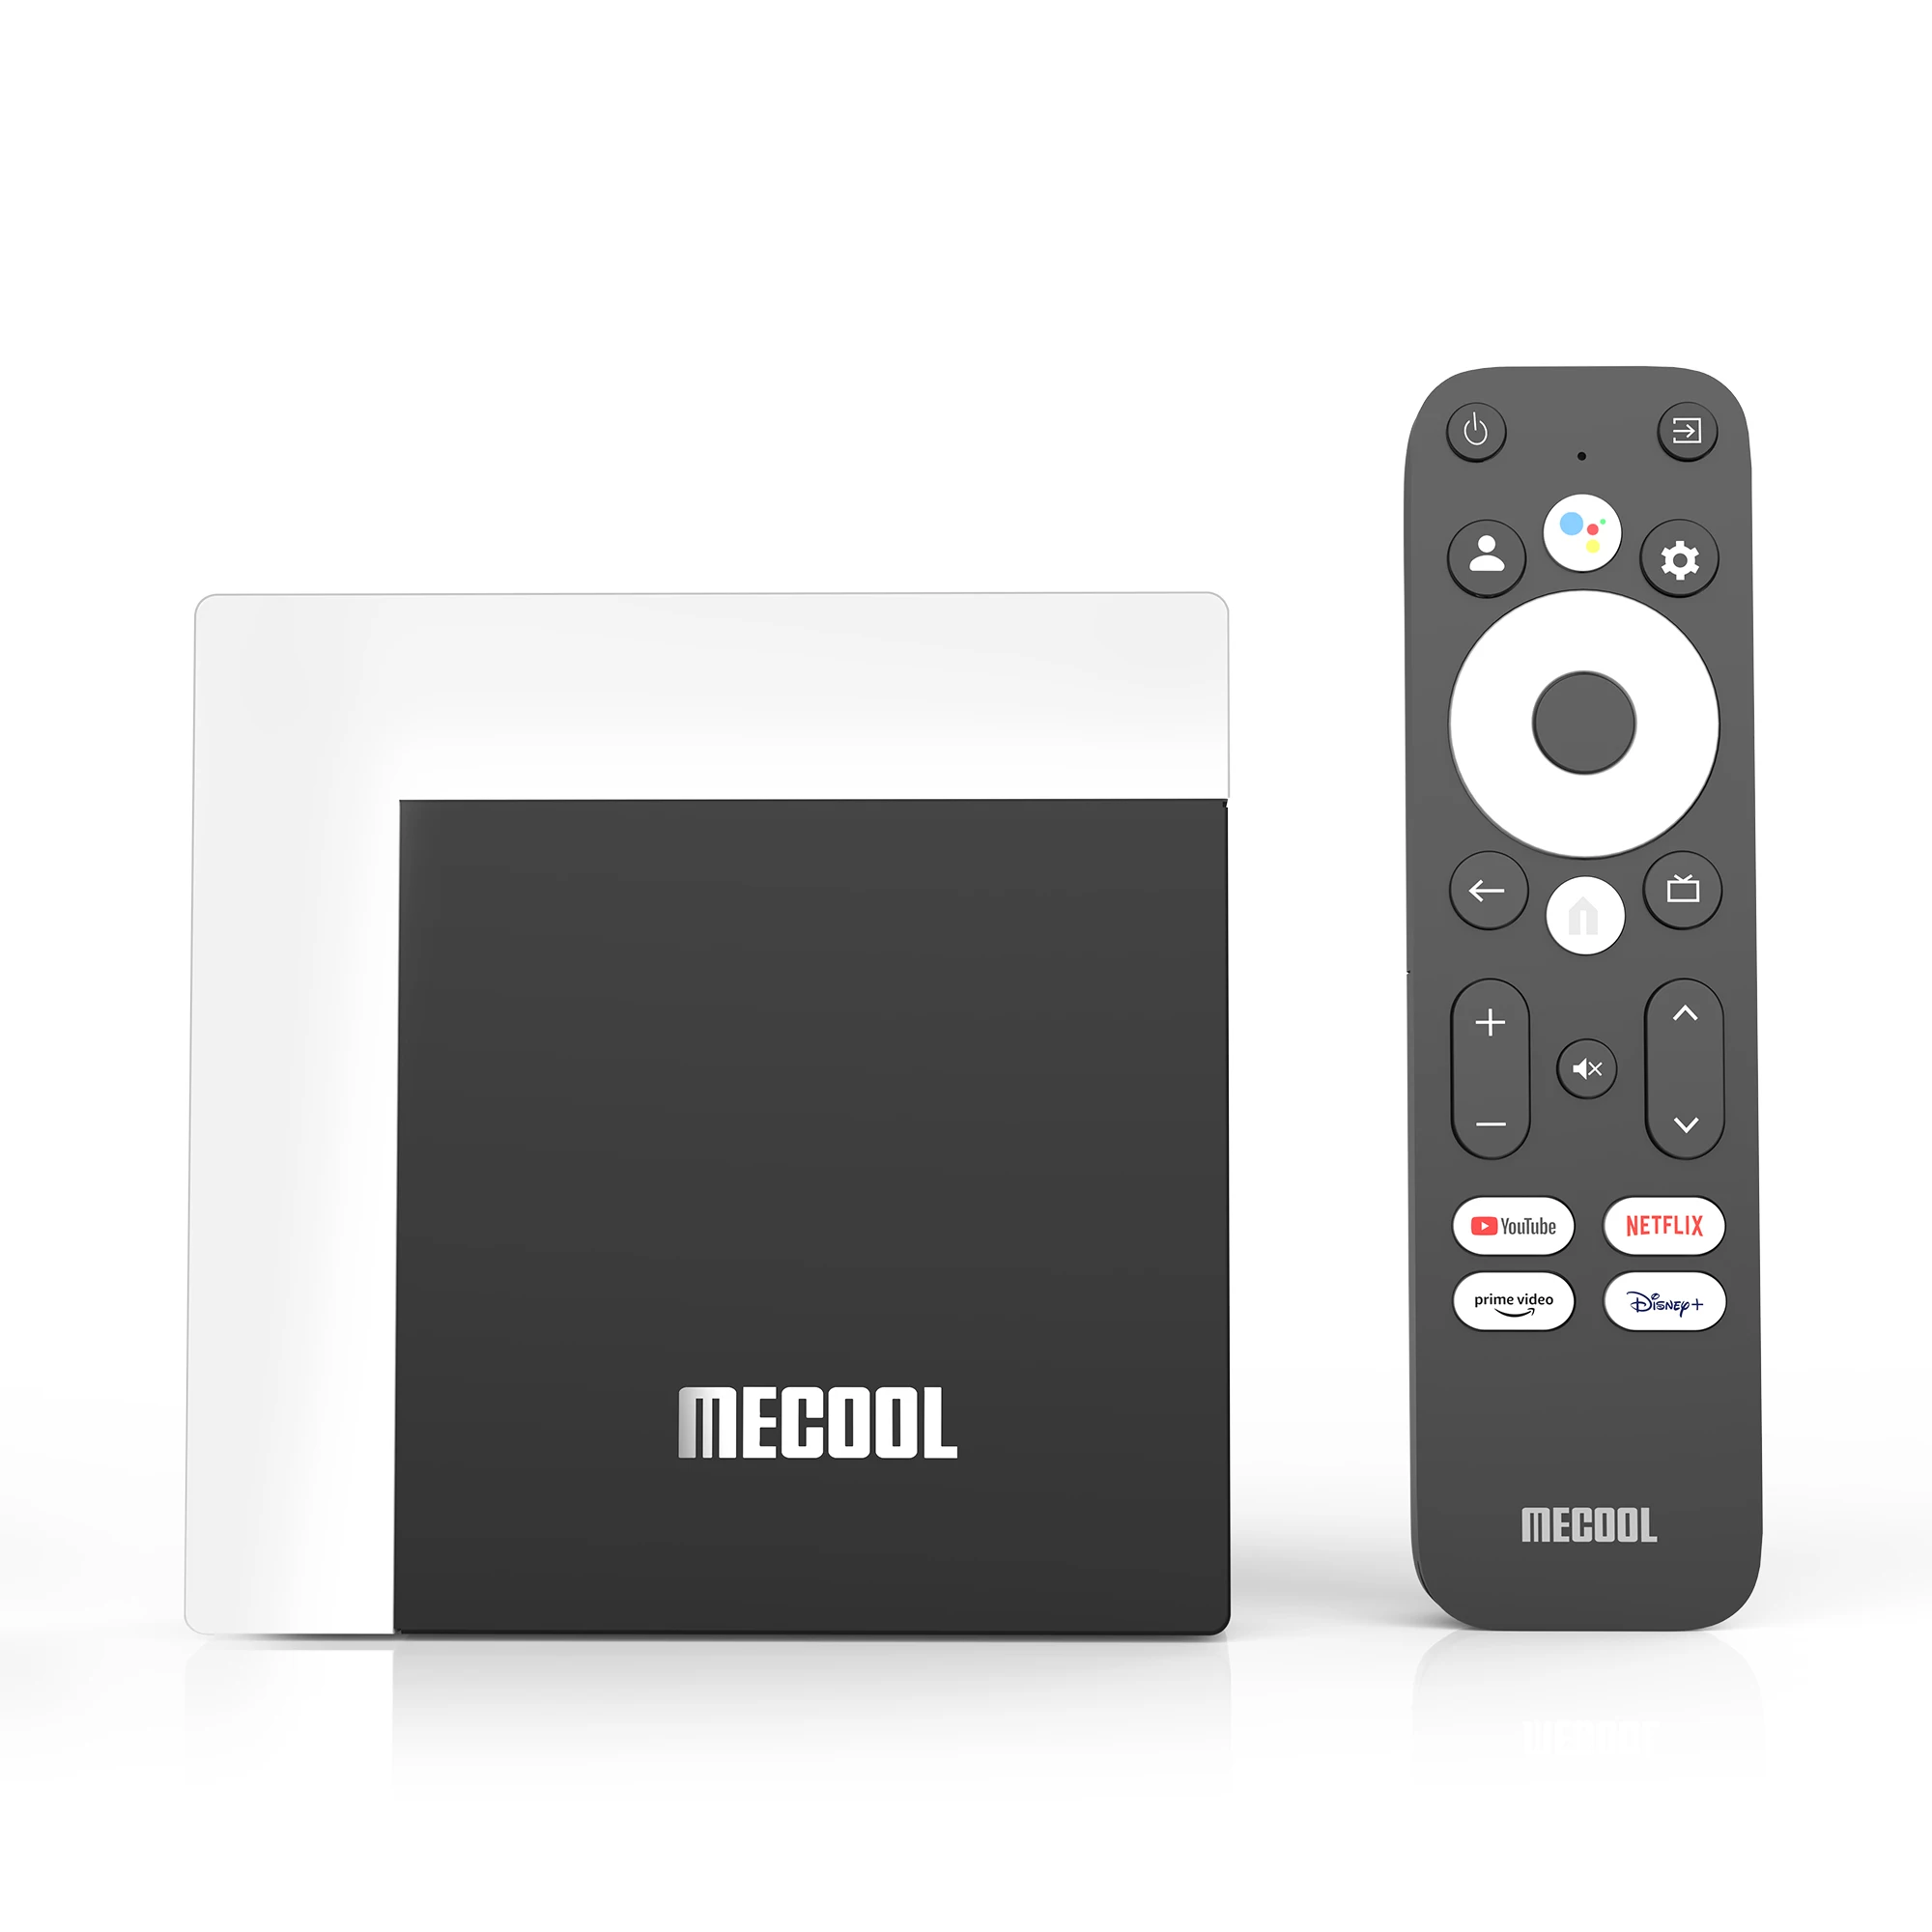 

Mecool 4k Google Amlogic S905 Y4 Quad Core Set Top Box Prime Video Pre-certified Dual Wifi with BT5.0 Tv Box KM7 PLUS 2GB 16GB